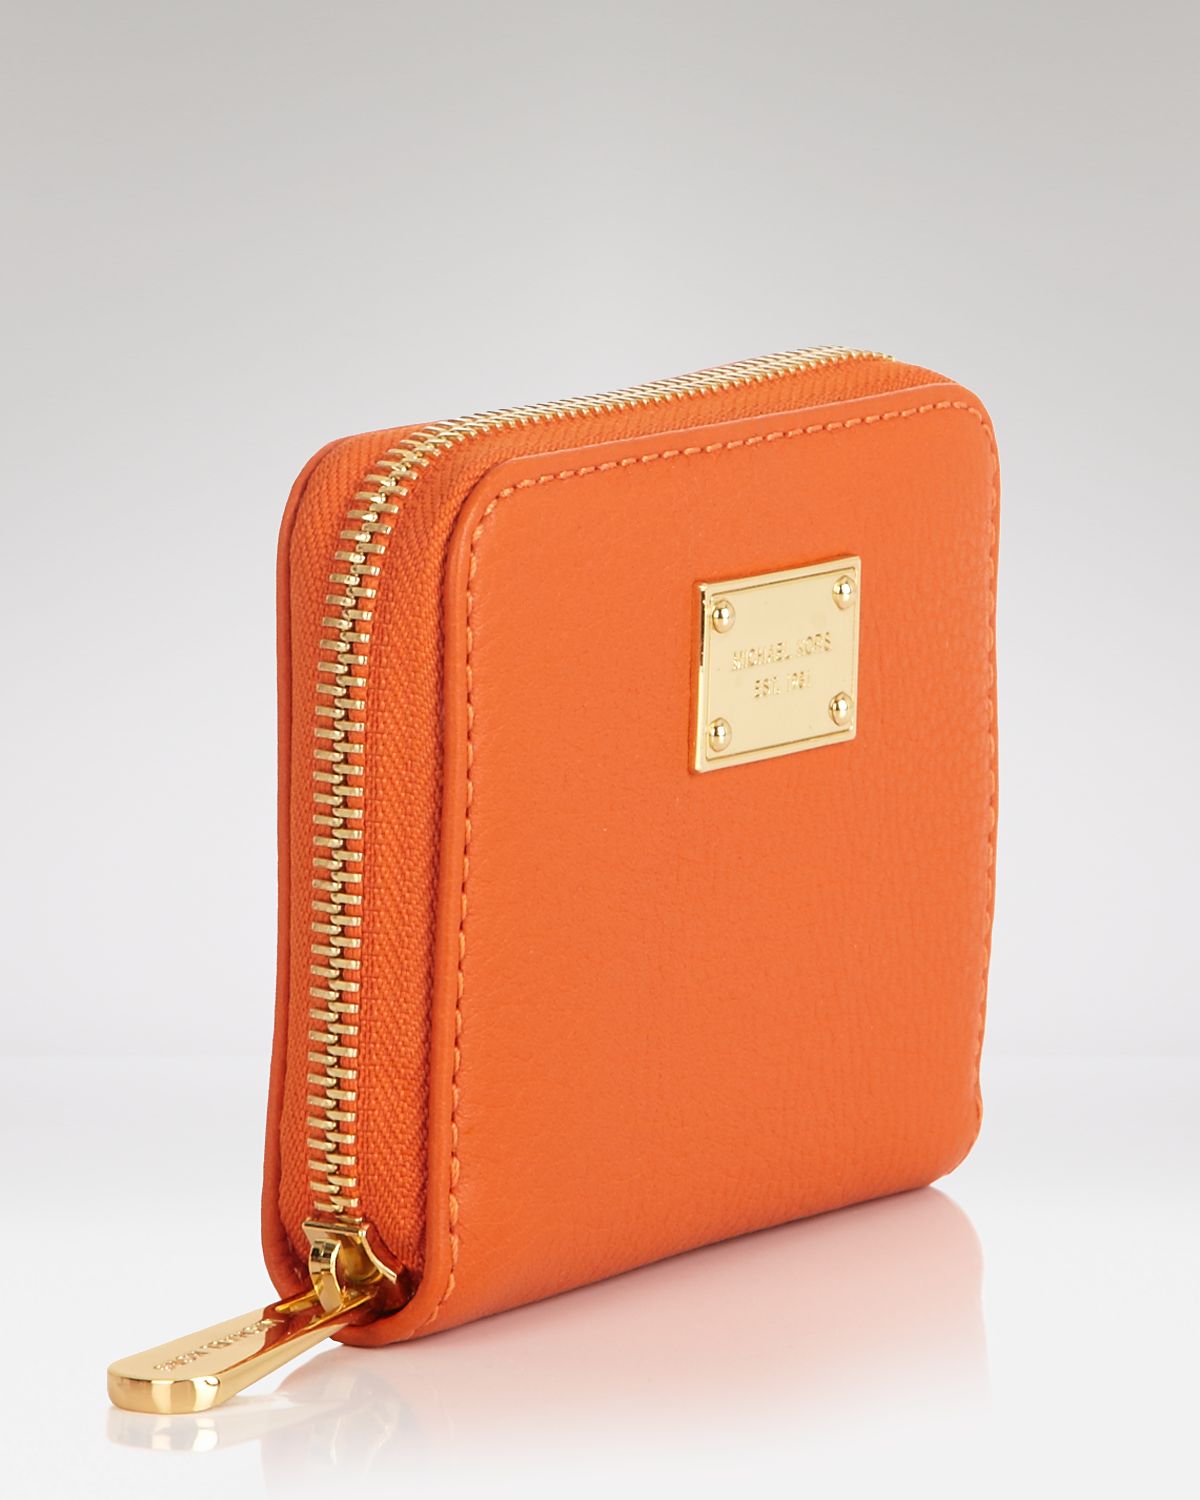 orange michael kors wallet